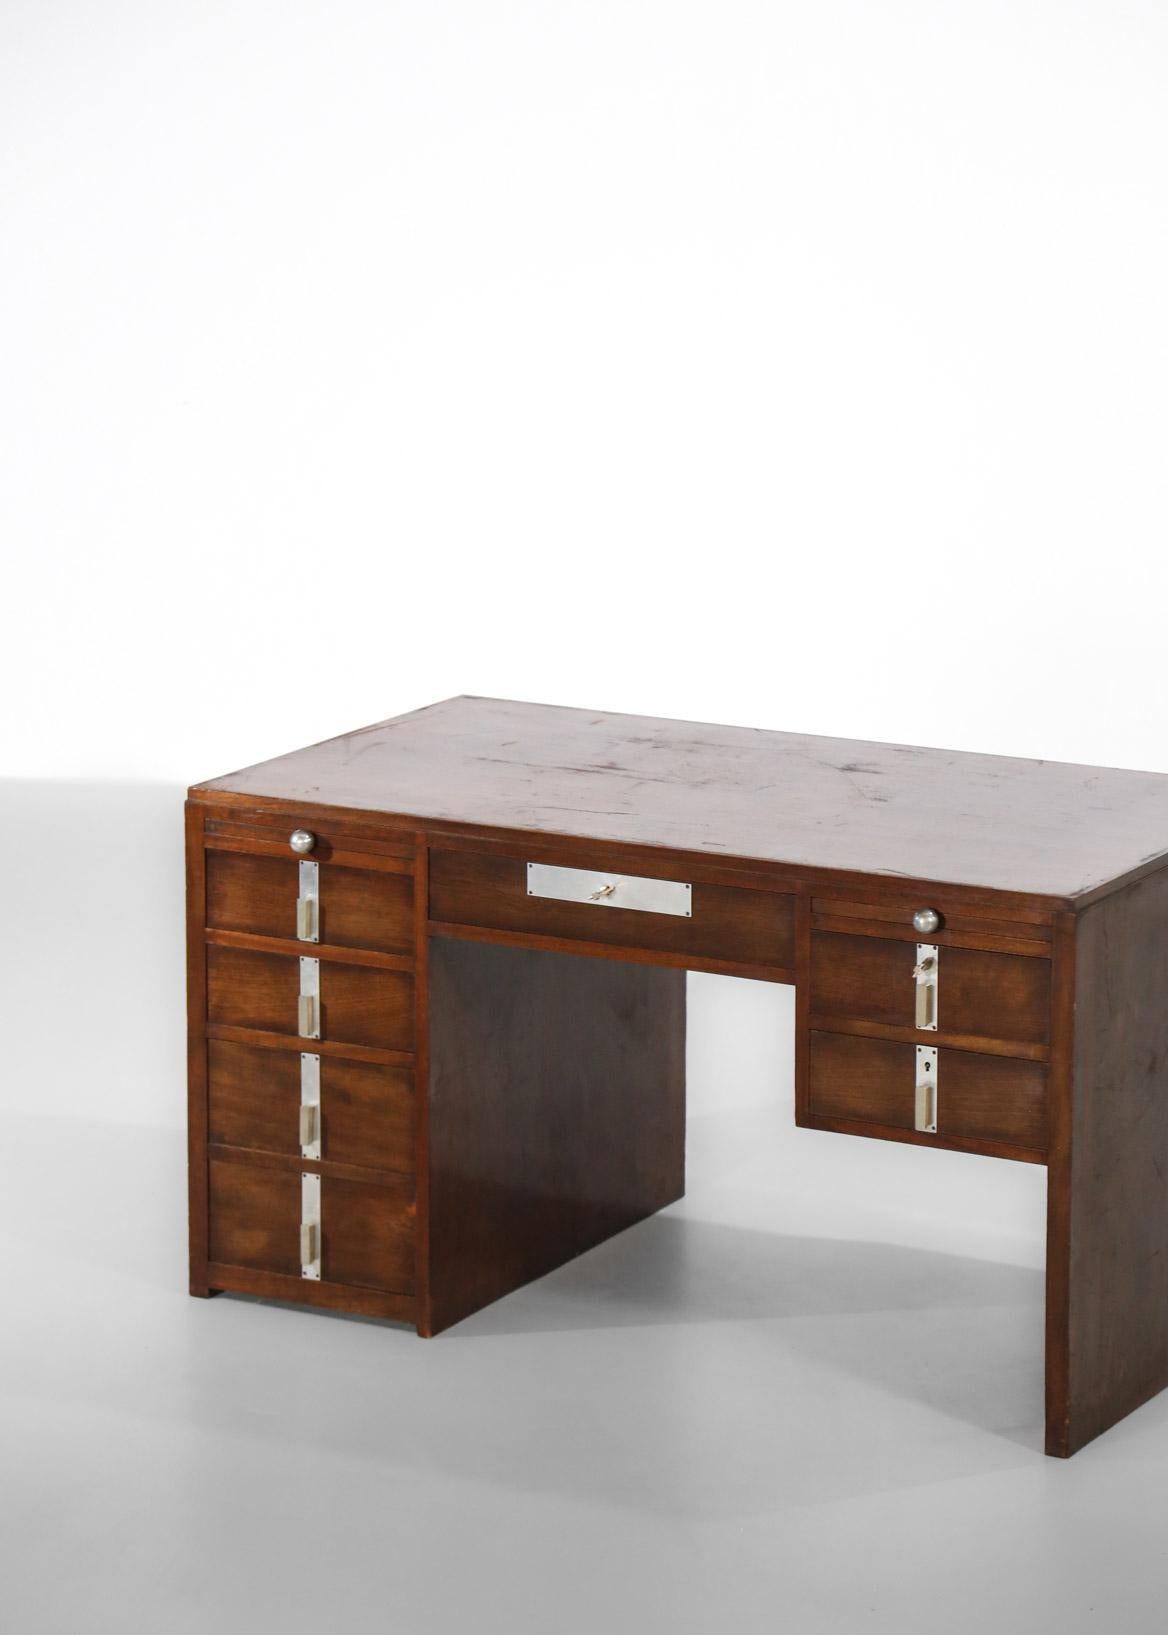 Art Deco Desk, Pierre Jeanneret/Jacques Adnet Style, Modernist 1